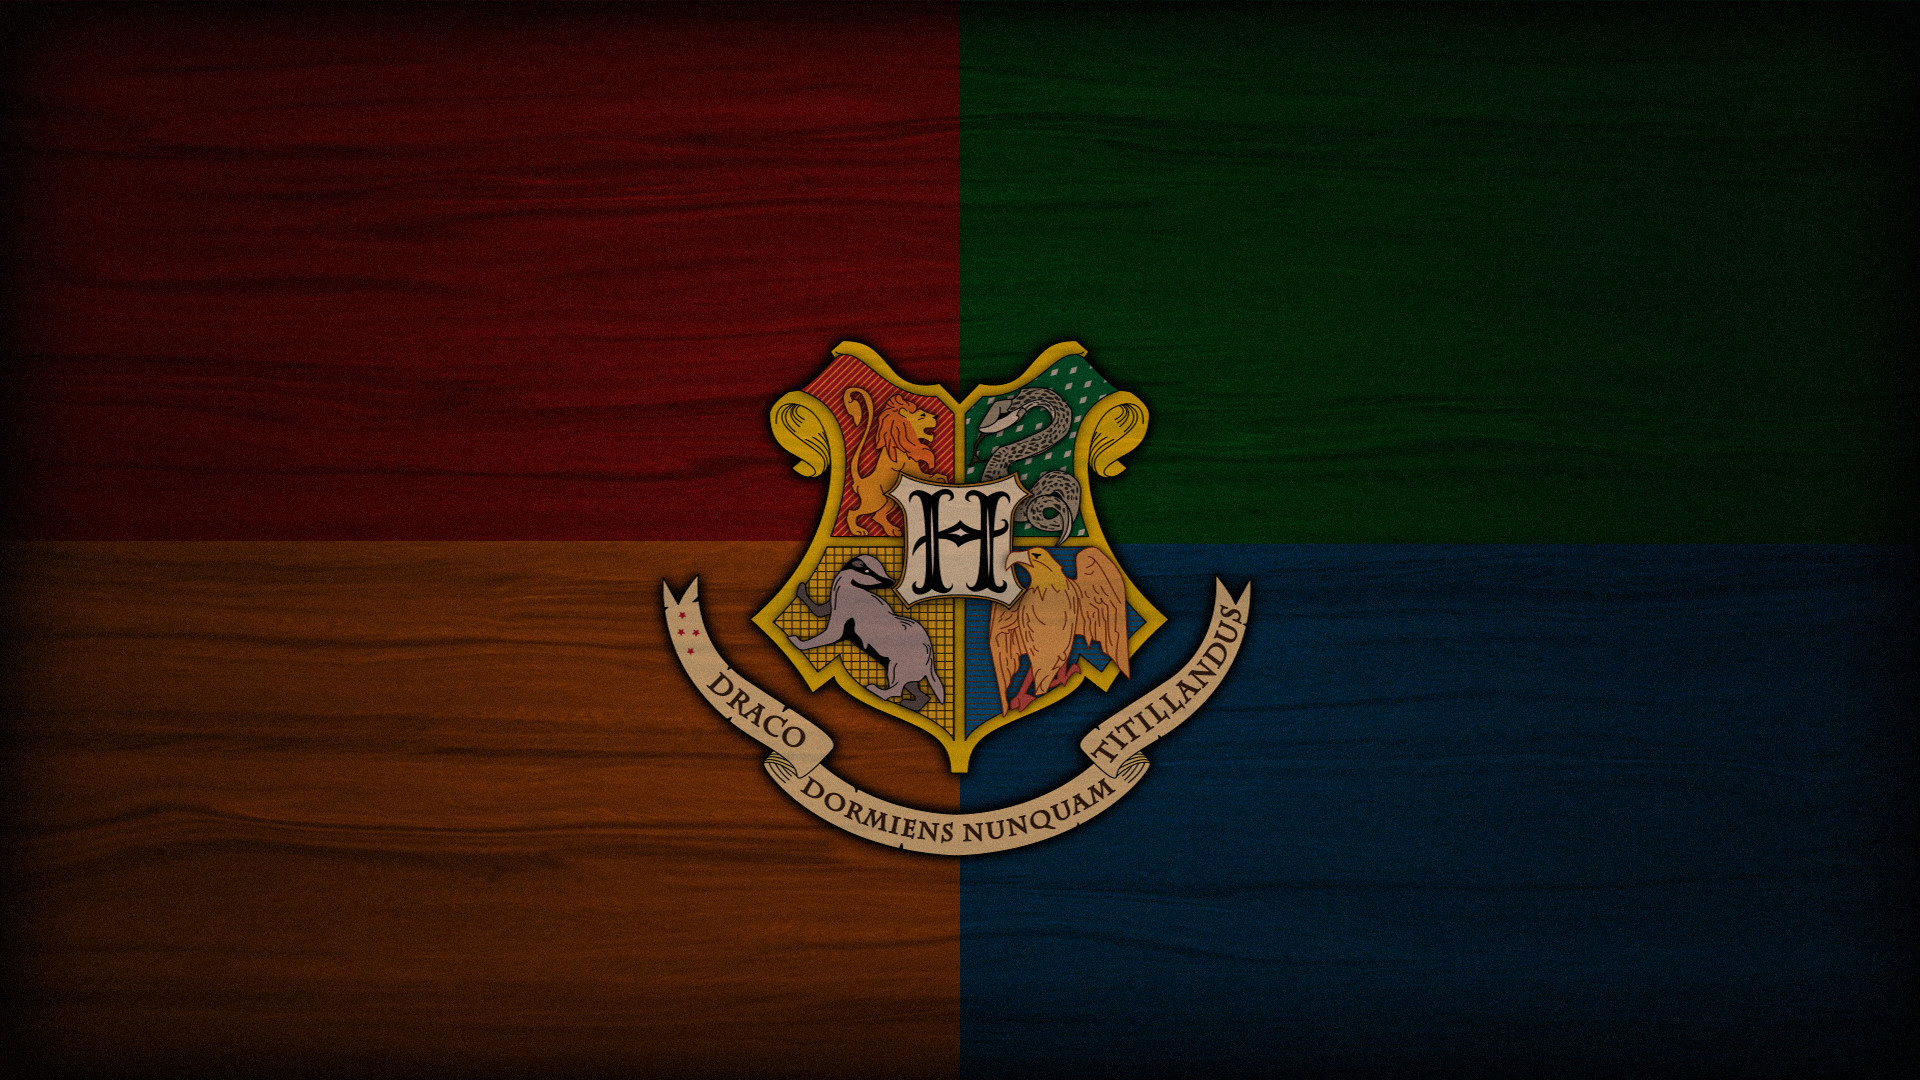 1920x1080 Image - Hogwarts crest wallpaper by vaultofdaedalus-d75c692.png | The Harry  Potter Fandom Wikia | FANDOM powered by Wikia